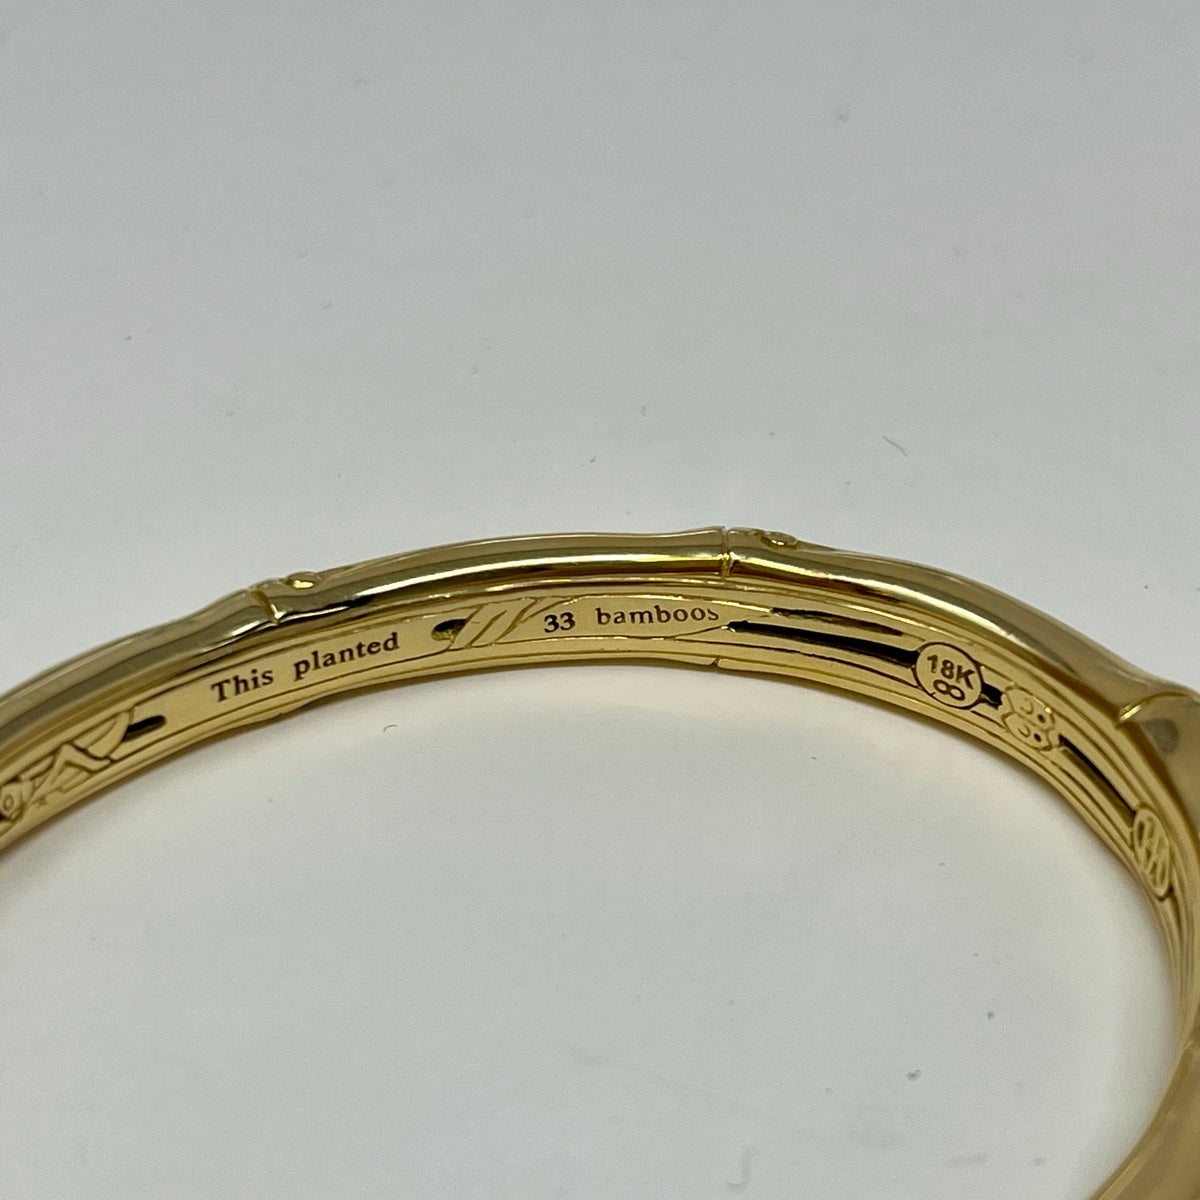 John Hardy 18K Gold Bamboo Cuff Bracelet with Diamond Caps